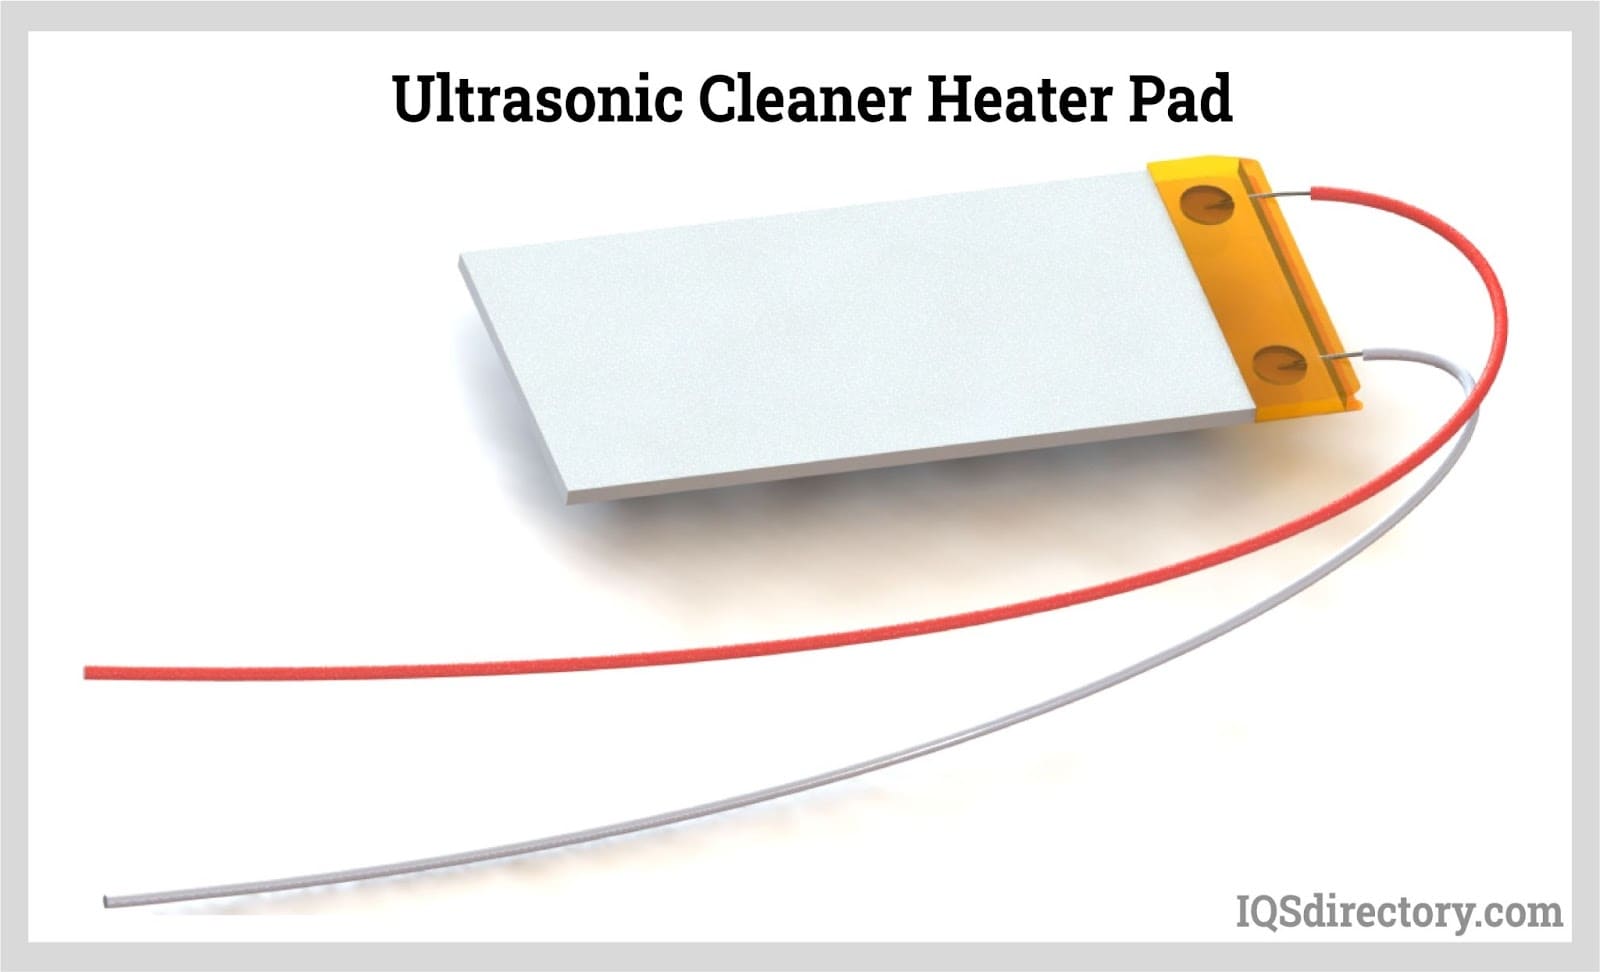 Ultrasonic Cleaner Heater Pad